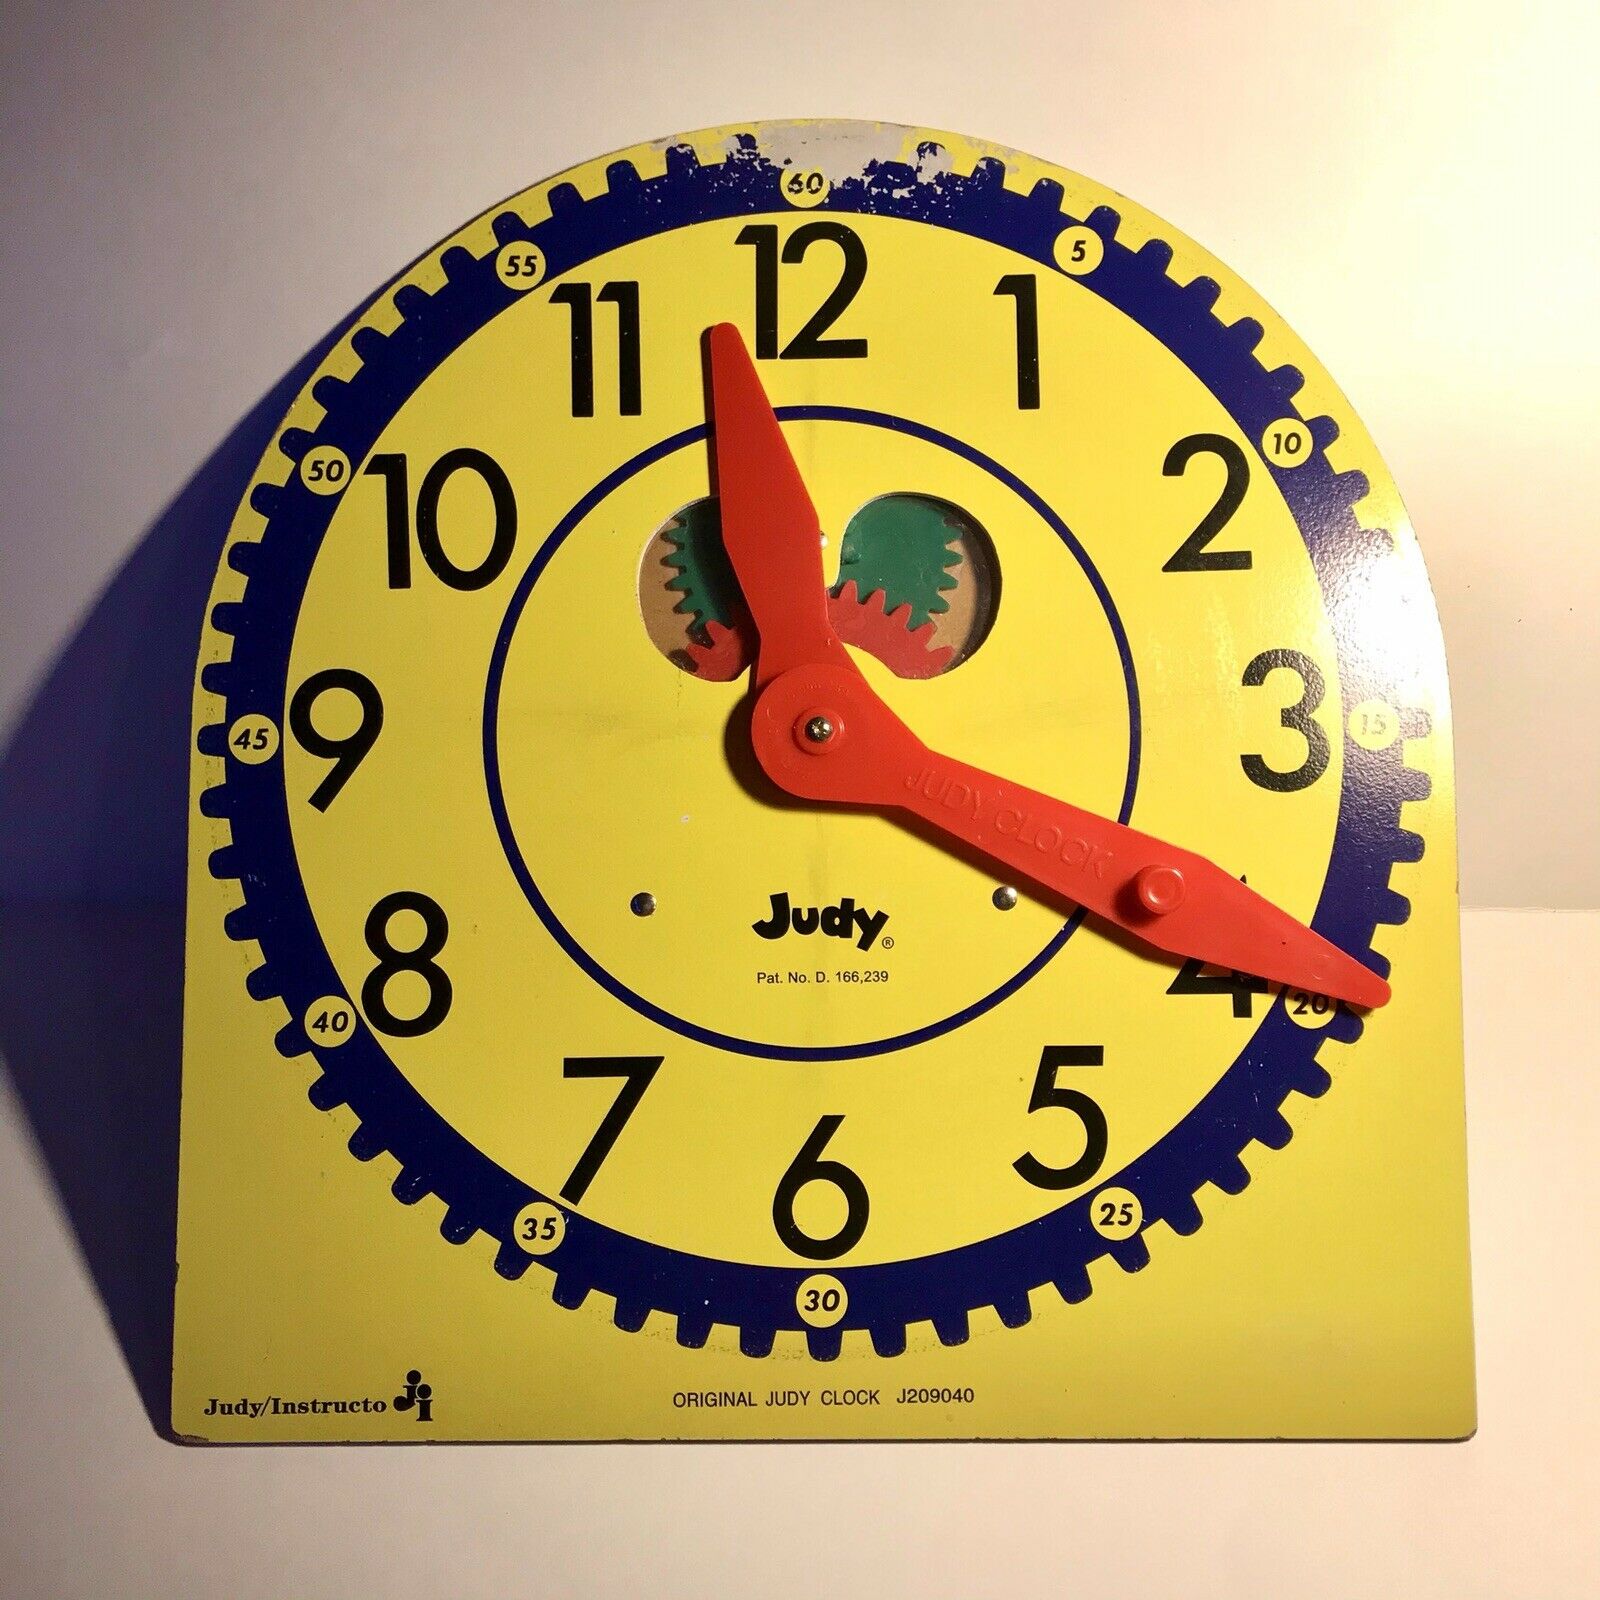 Original Judy/Instructo Clock by Carson-Dellosa - Home Schooling Tool, Teaching